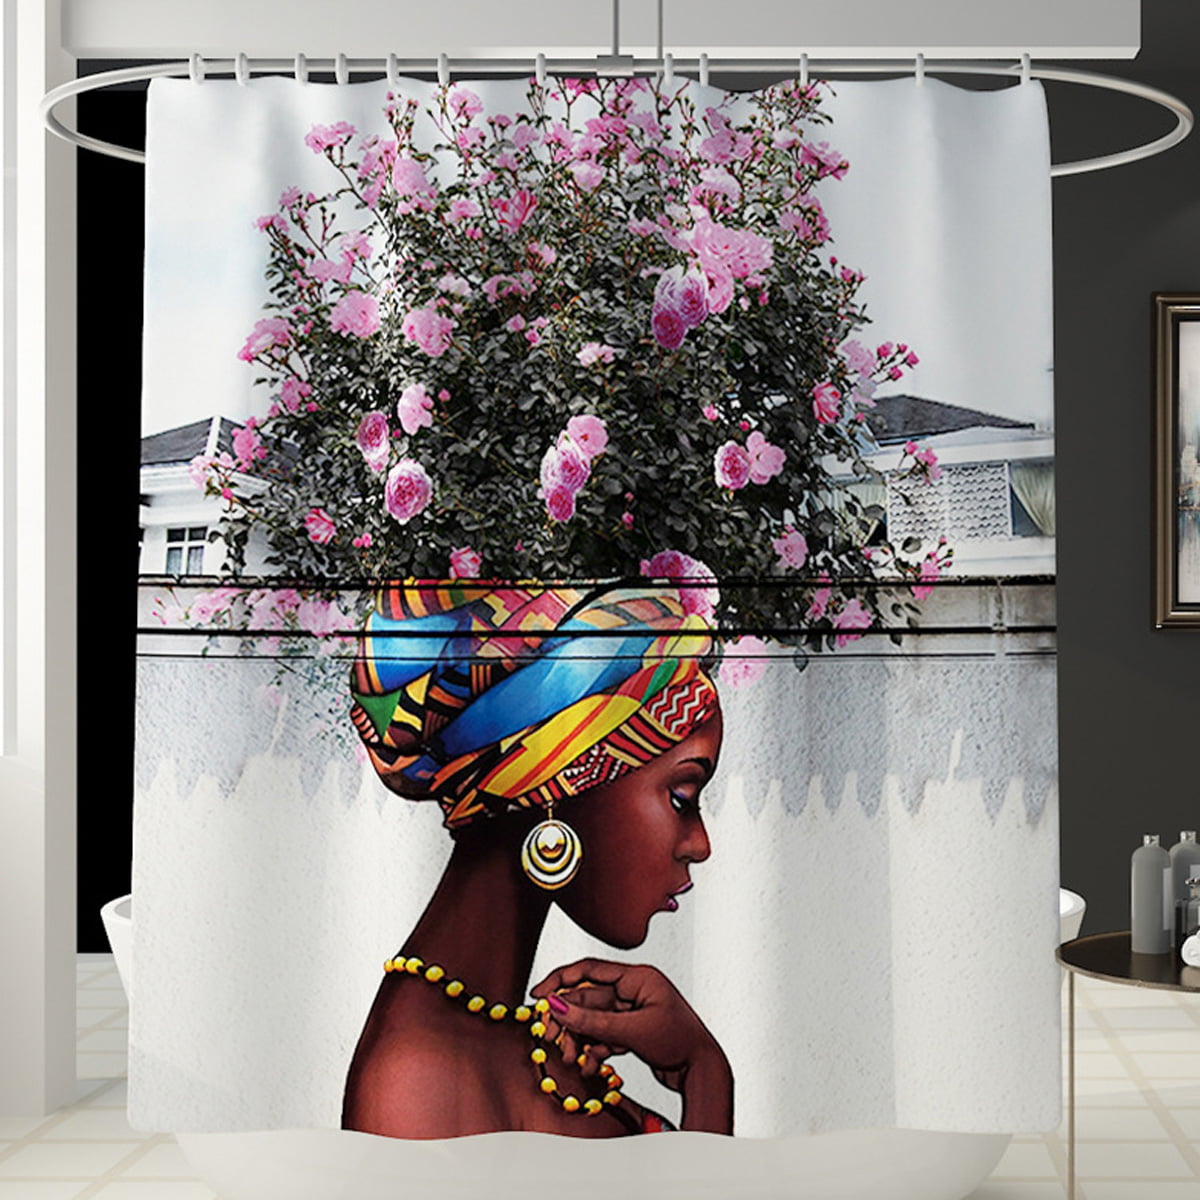 Novashion Black Girl Shower Curtain, Afro Woman Shower Curtain